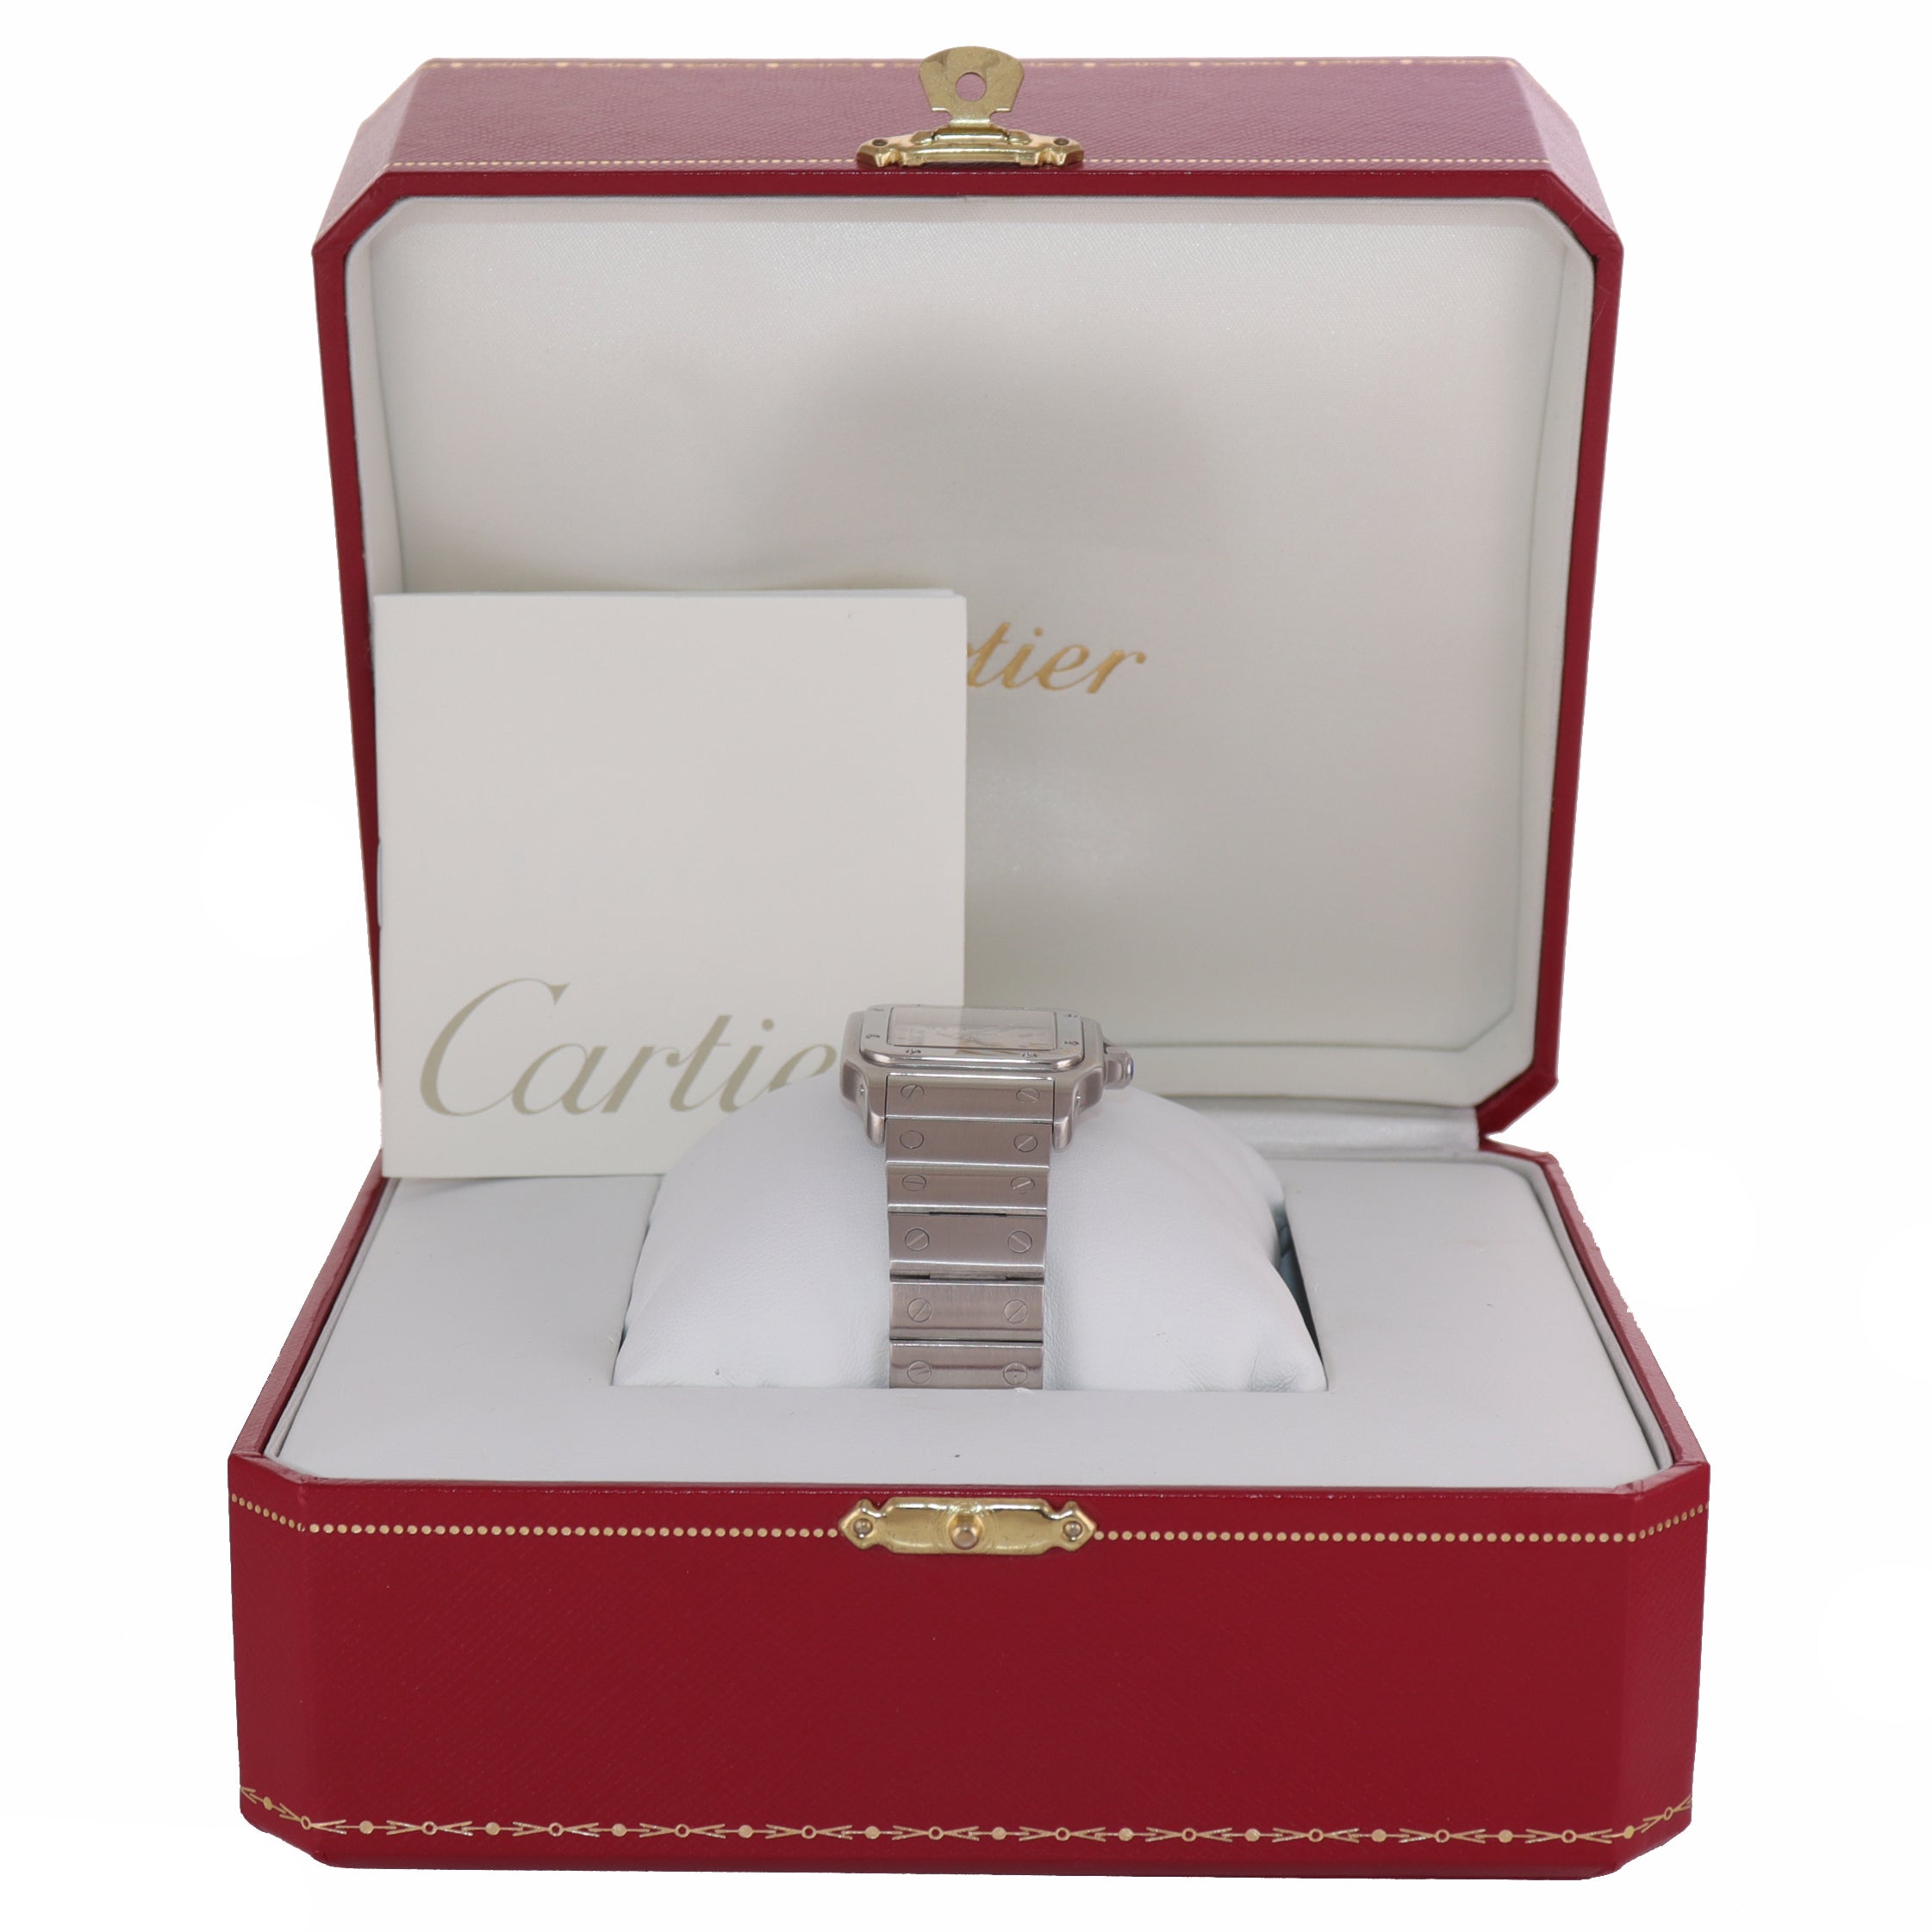 MINT Cartier Santos Galbee 29mm Automatic Steel Silver Roman Date Watch 2319